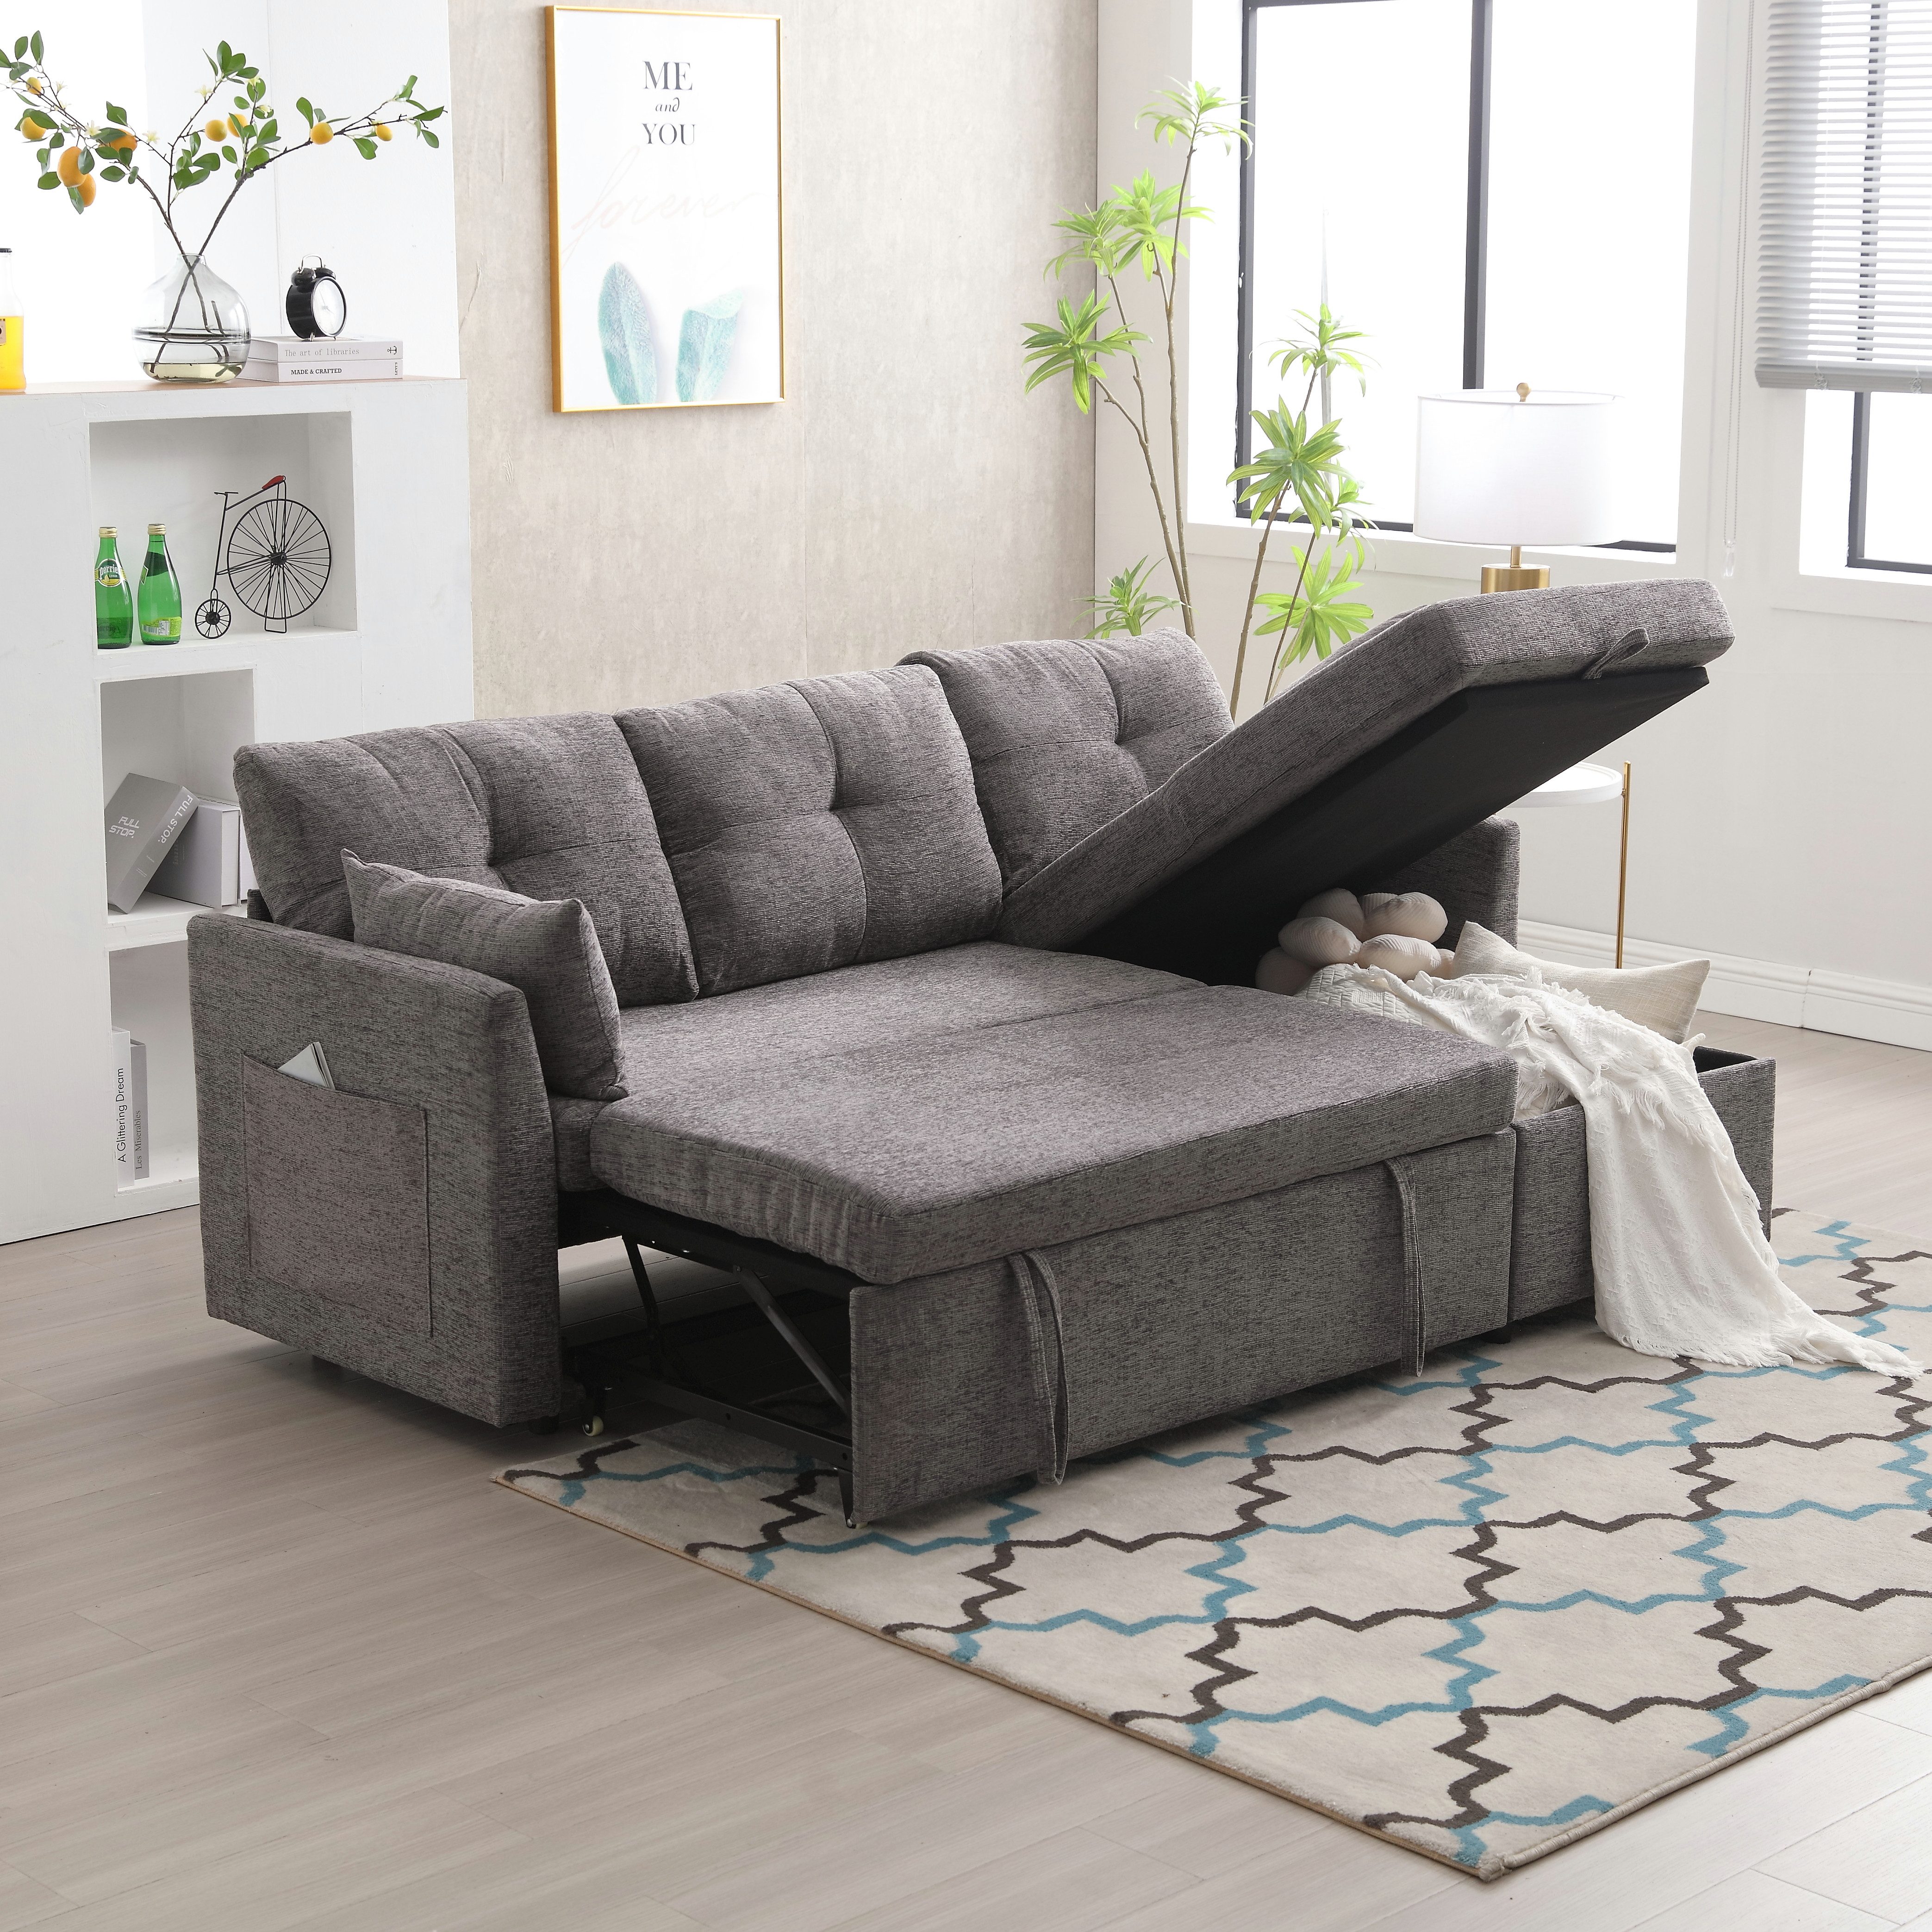 Odikalo Chaiselongue L-Form modulare Couch Loungesofa umkehrbar Stauraumsitzen Mehrfarbig